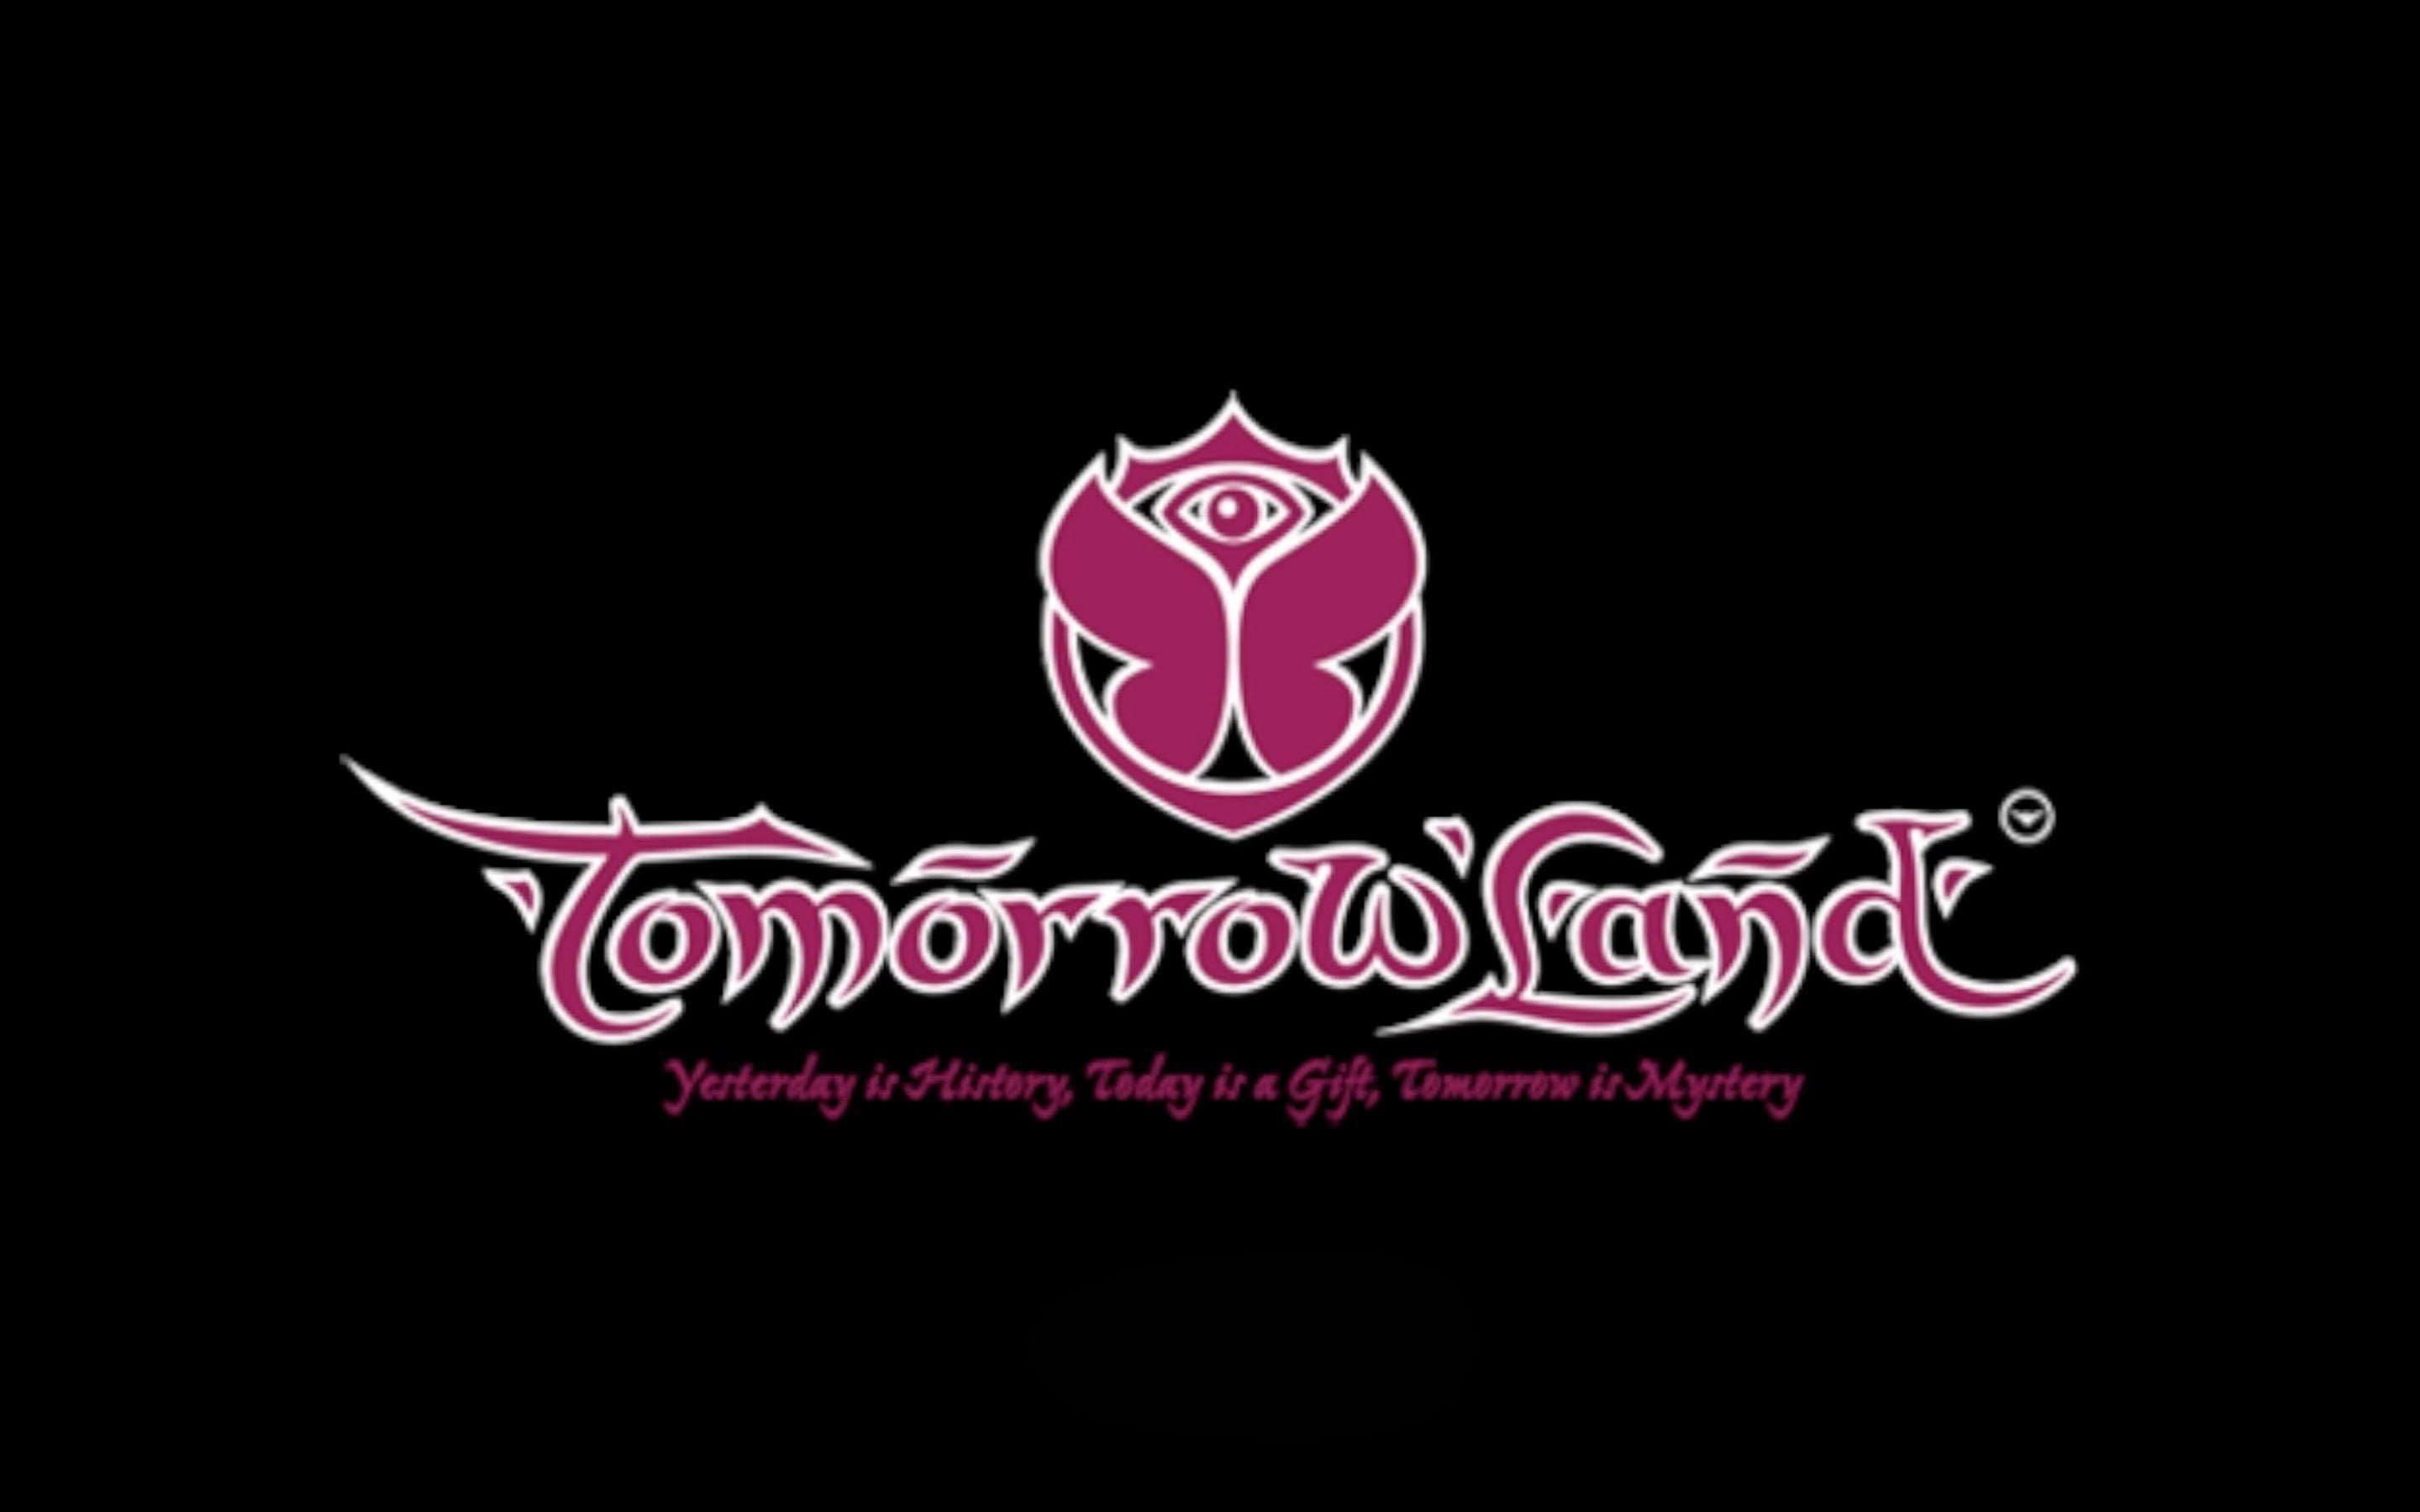 Tomorrowland logo